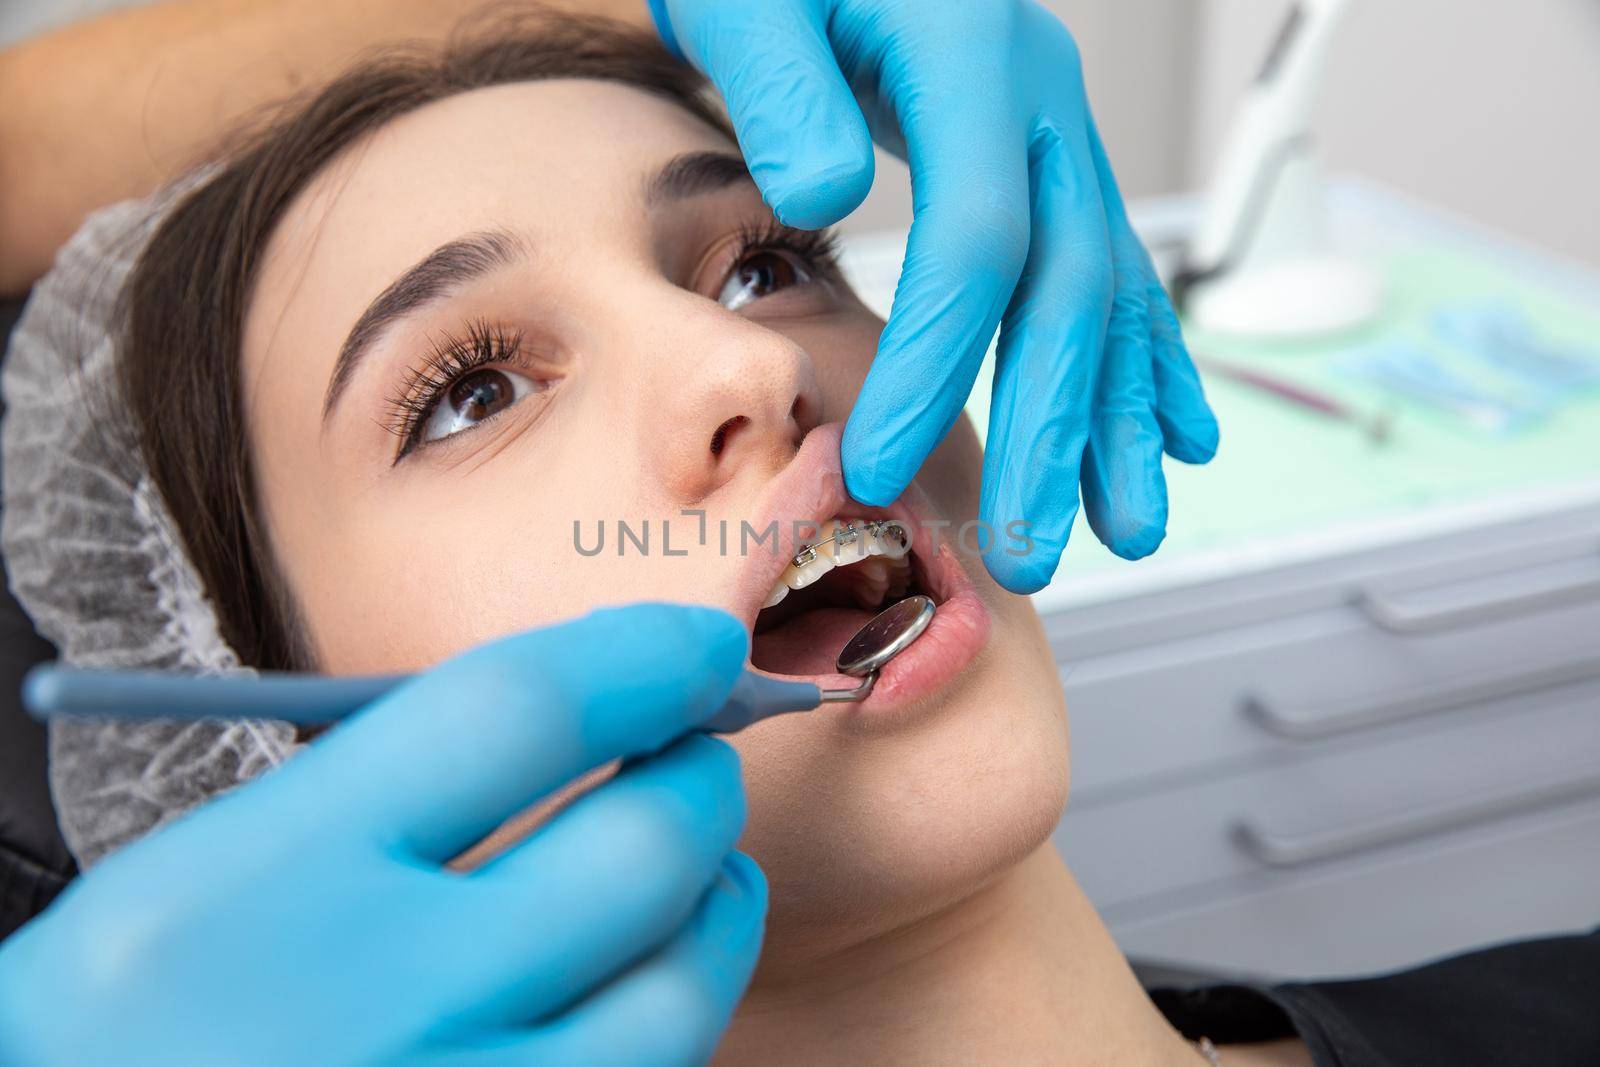 Dentist examining patient teeth with dental mirror. Dental check up concept by Mariakray